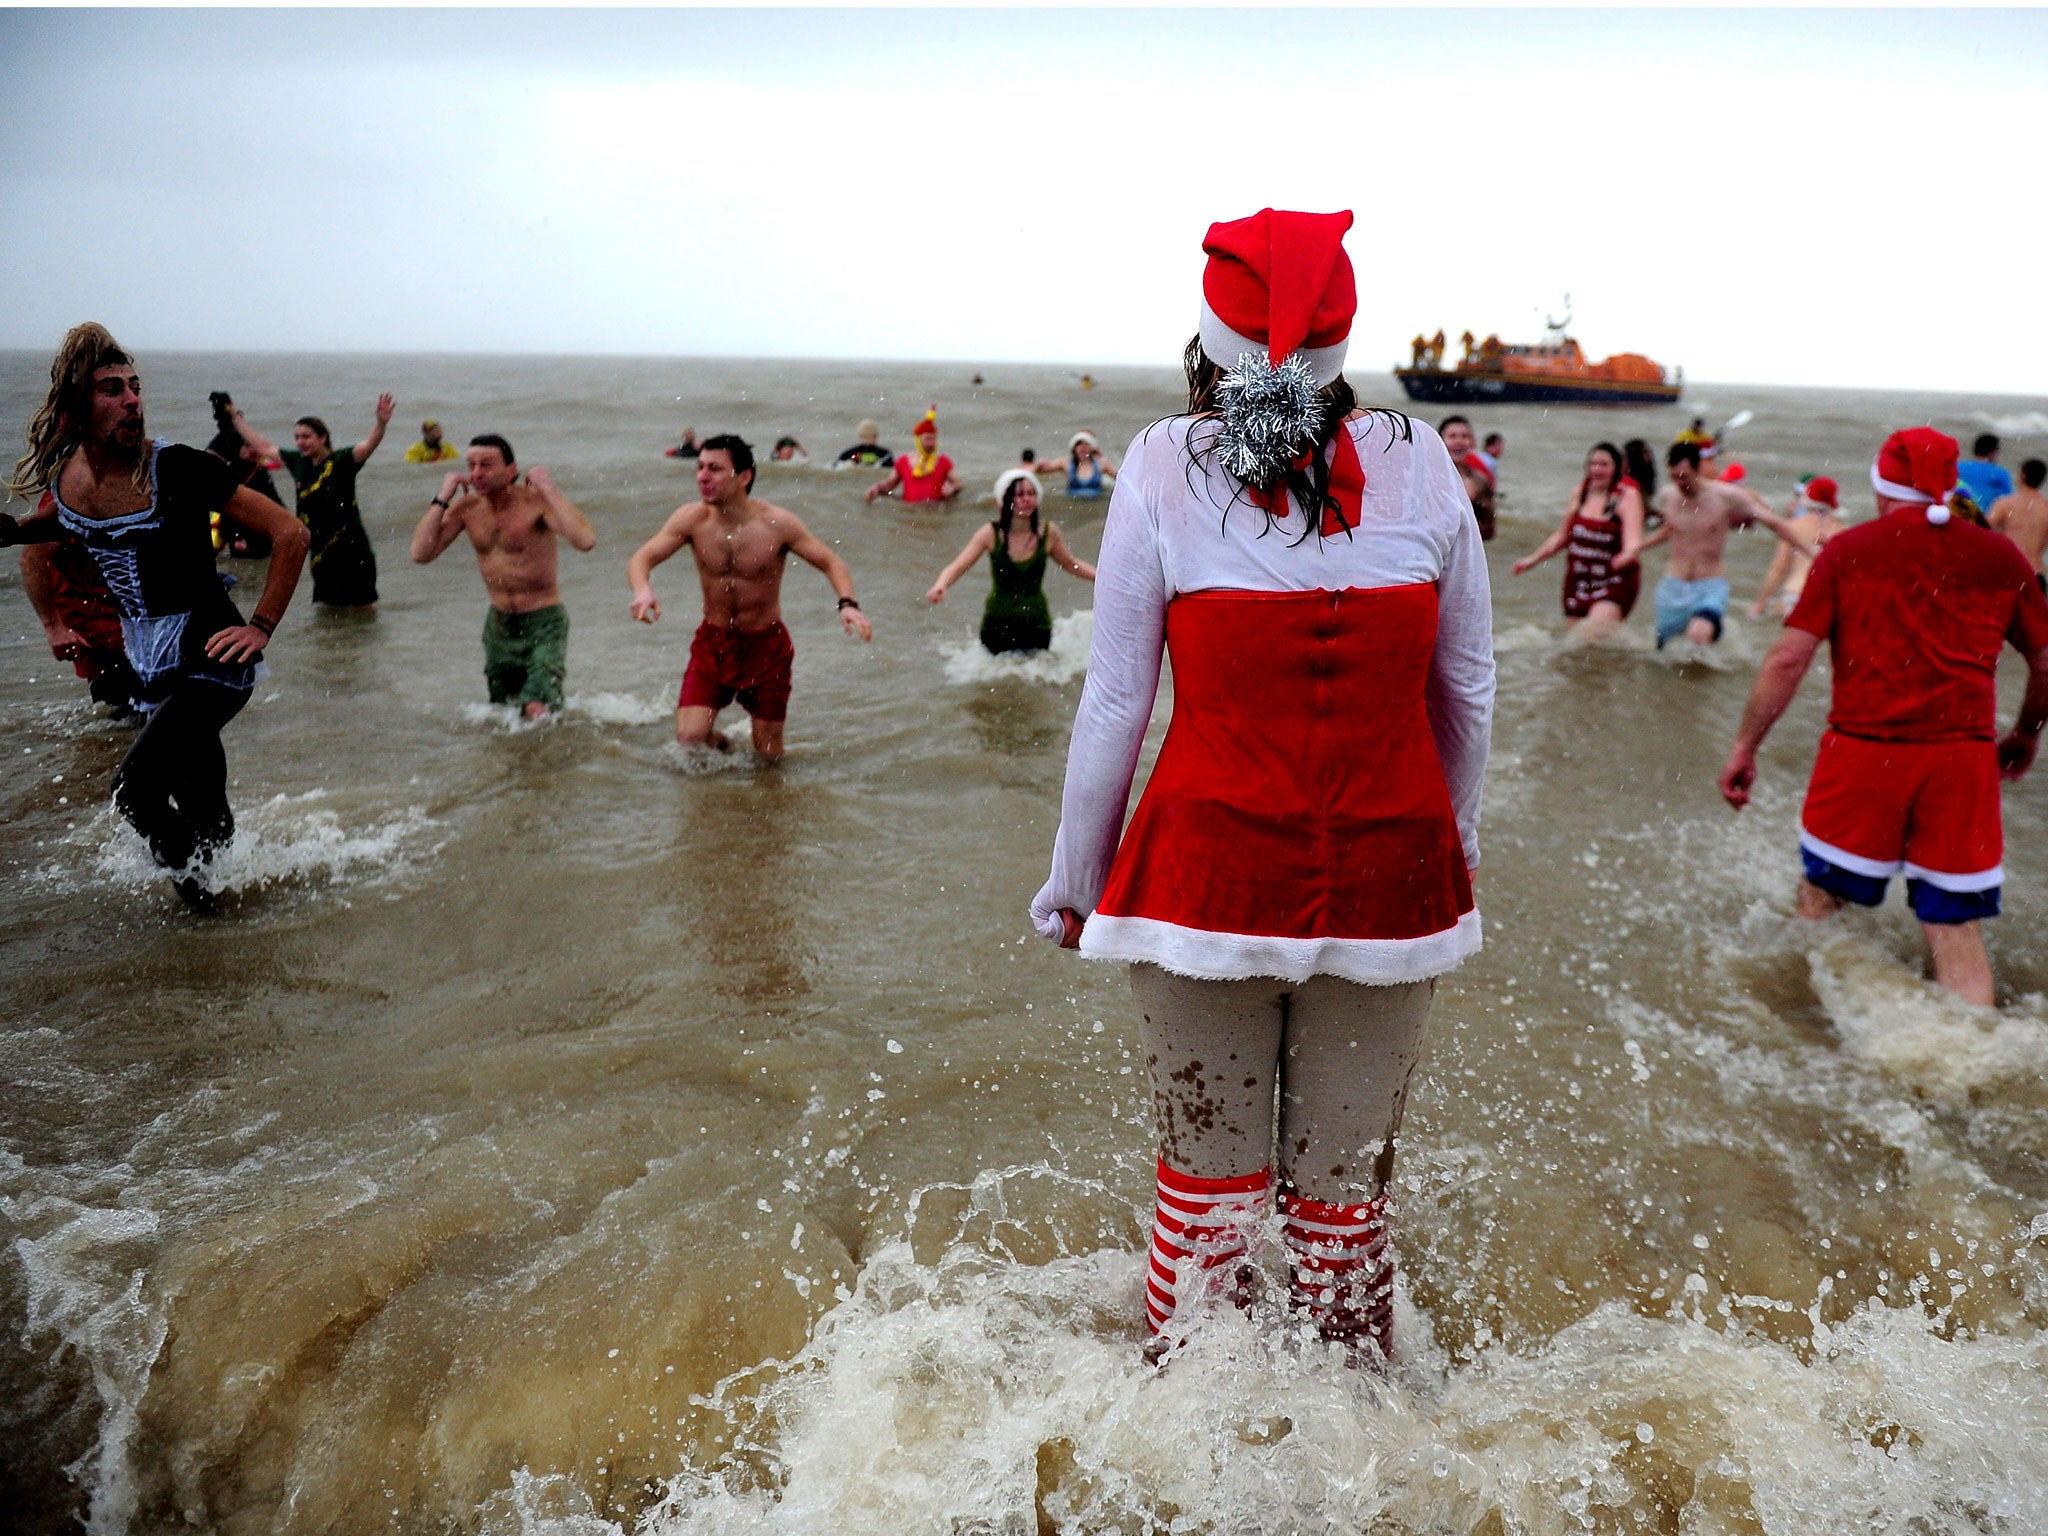 The 2012 swim saw its fair share of innovative Santa outfits...